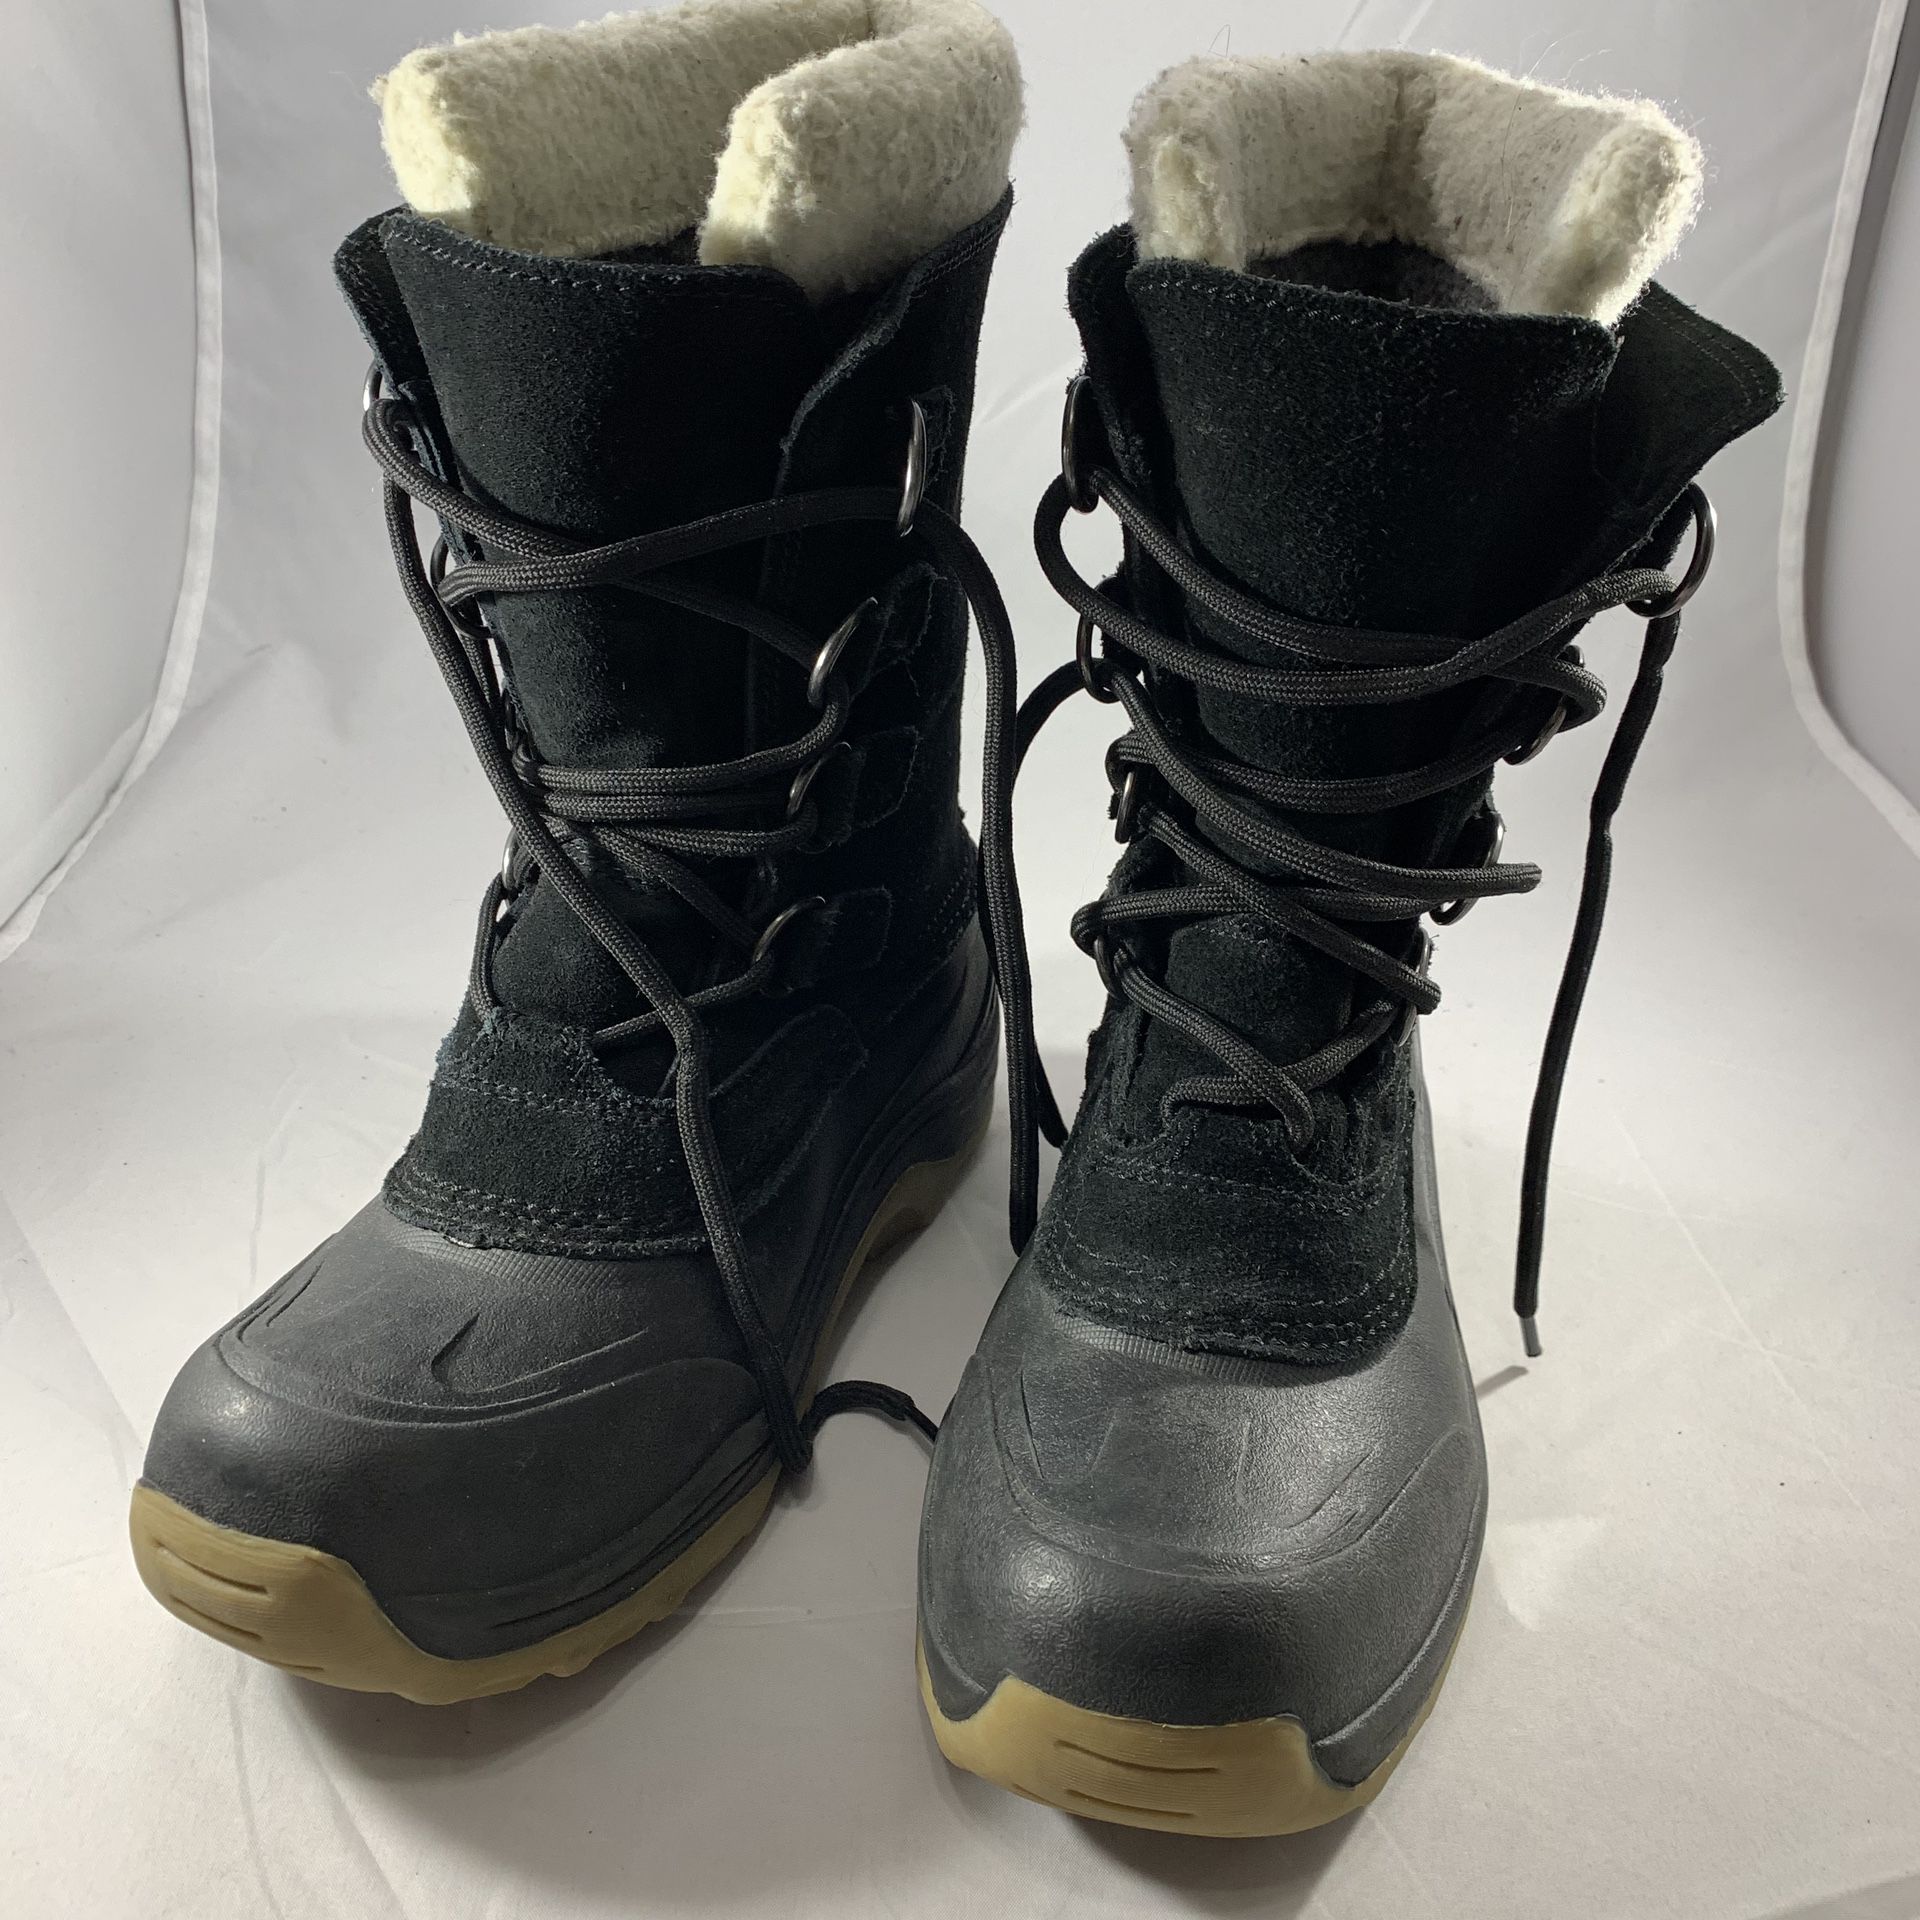 Lands-end snow boots size 3 little girls 5 woman’s